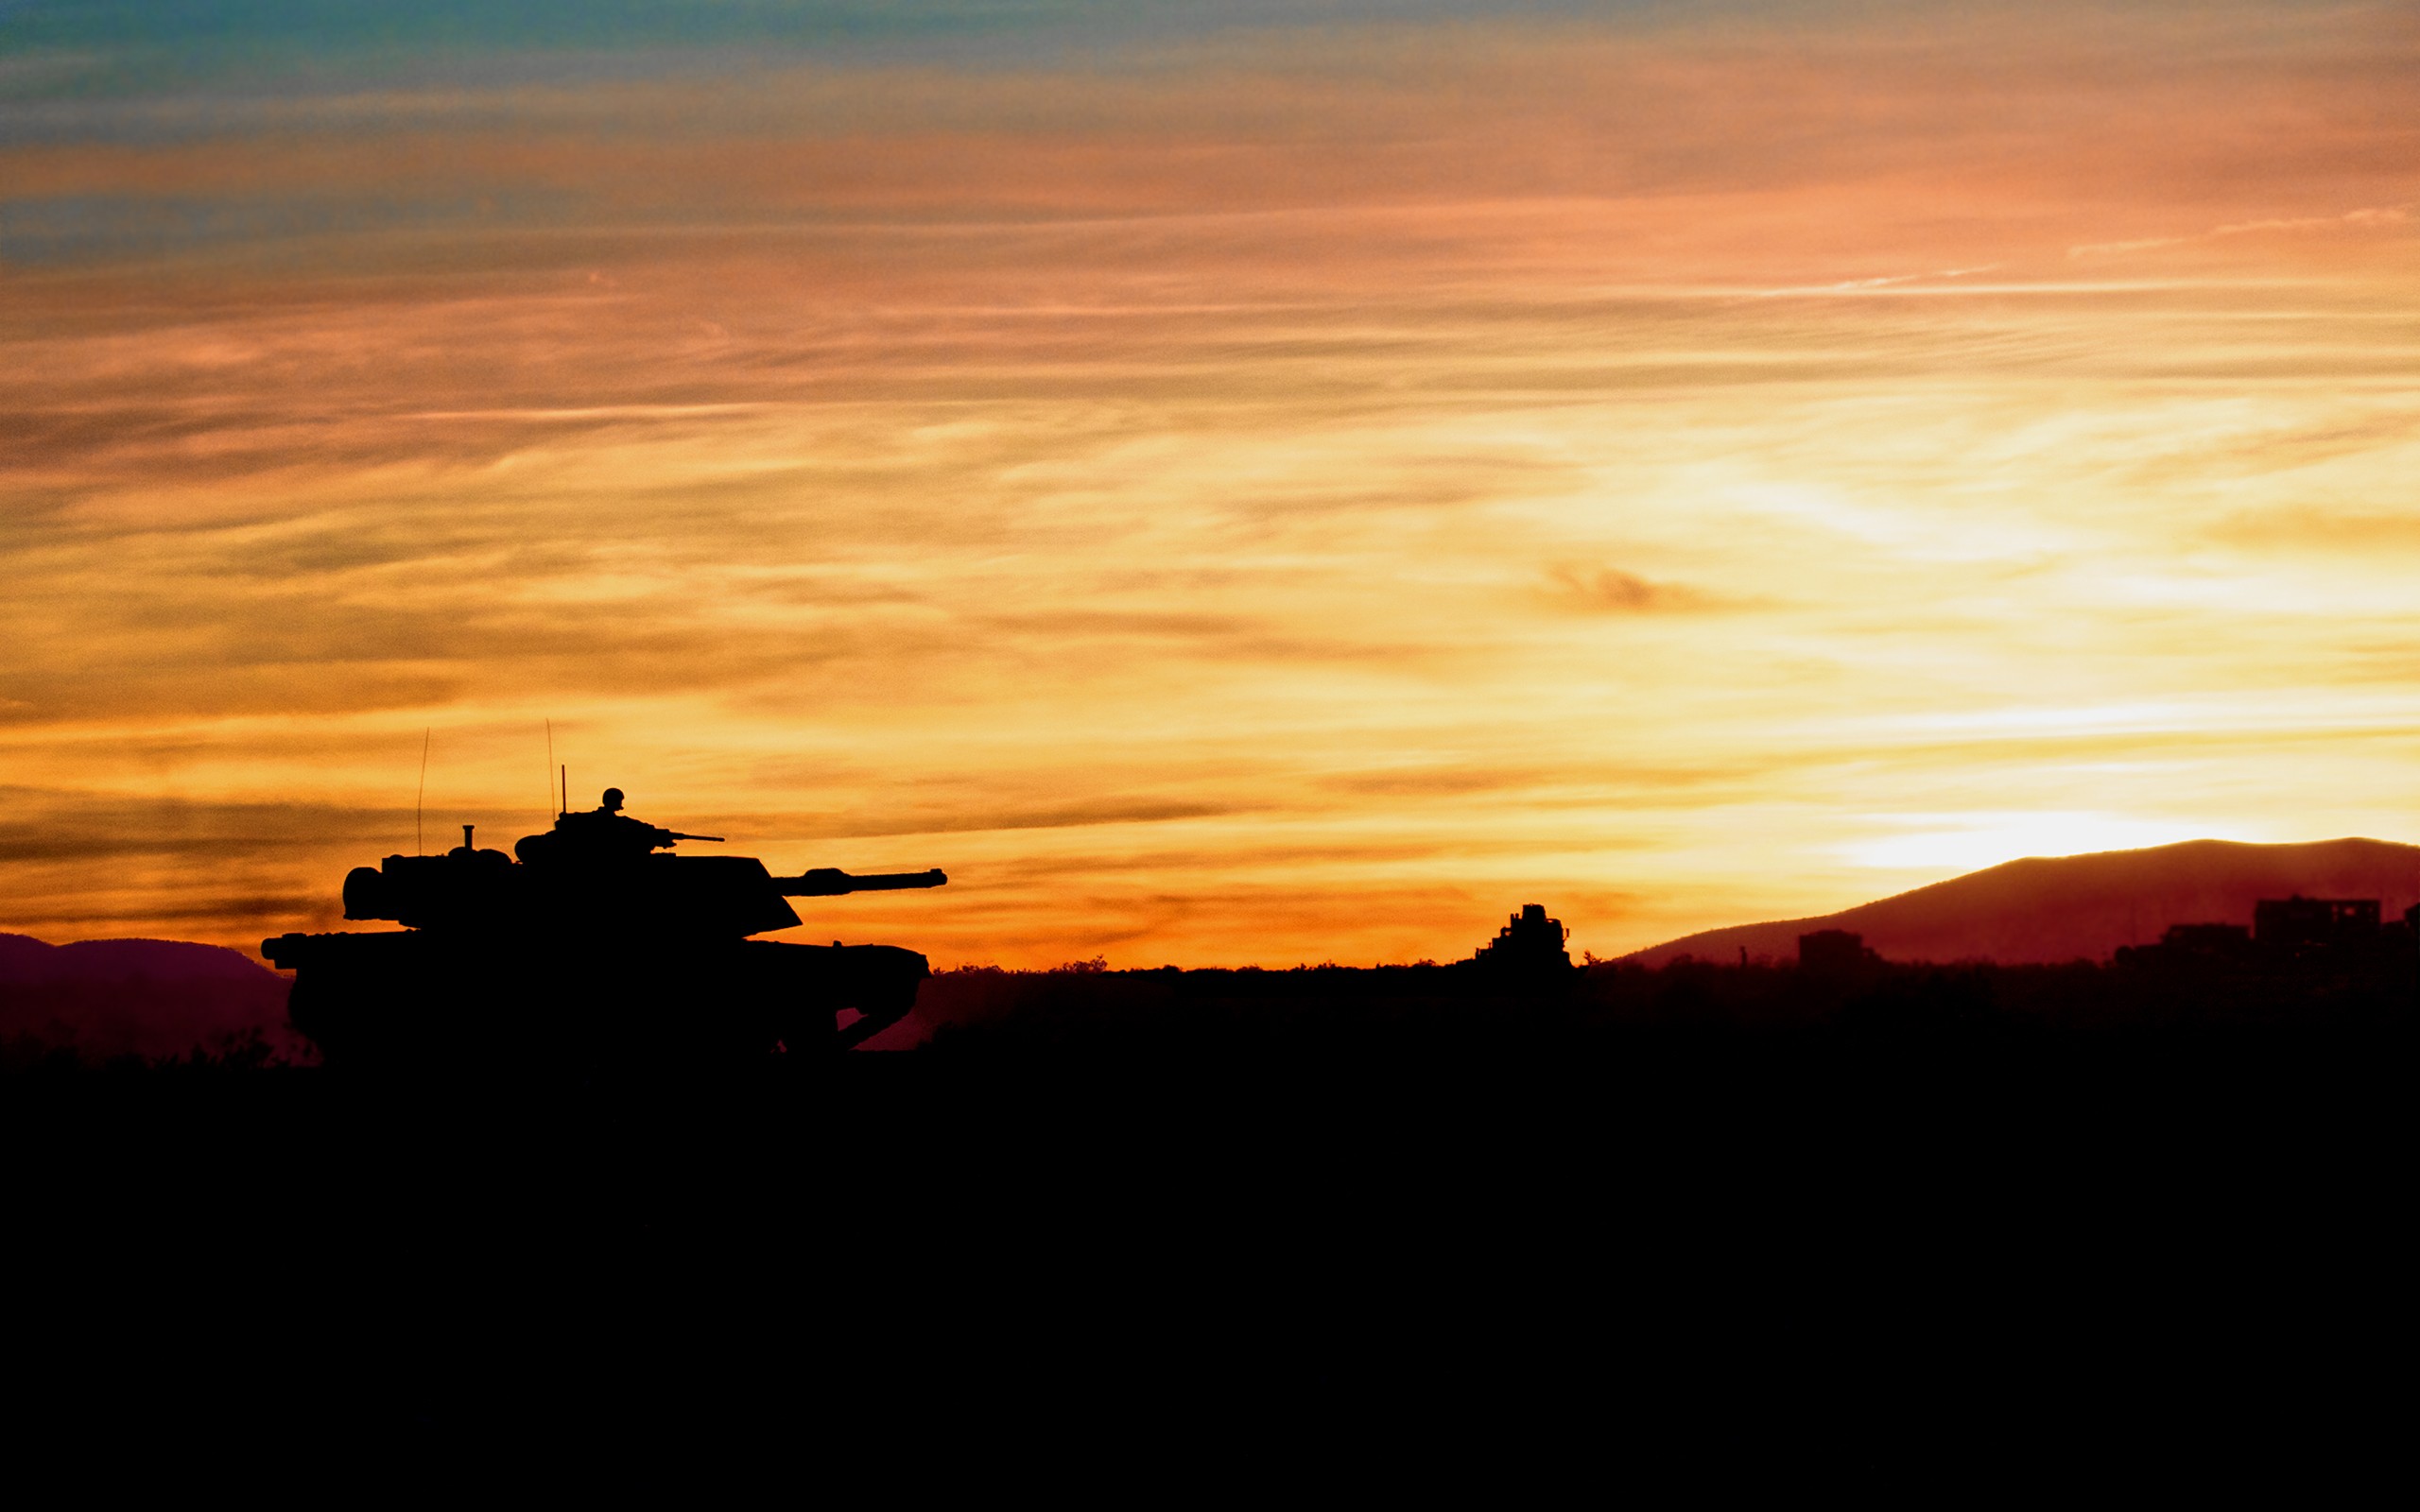 General 2560x1600 tank M1 Abrams military silhouette sunset vehicle military vehicle sky sunlight dark